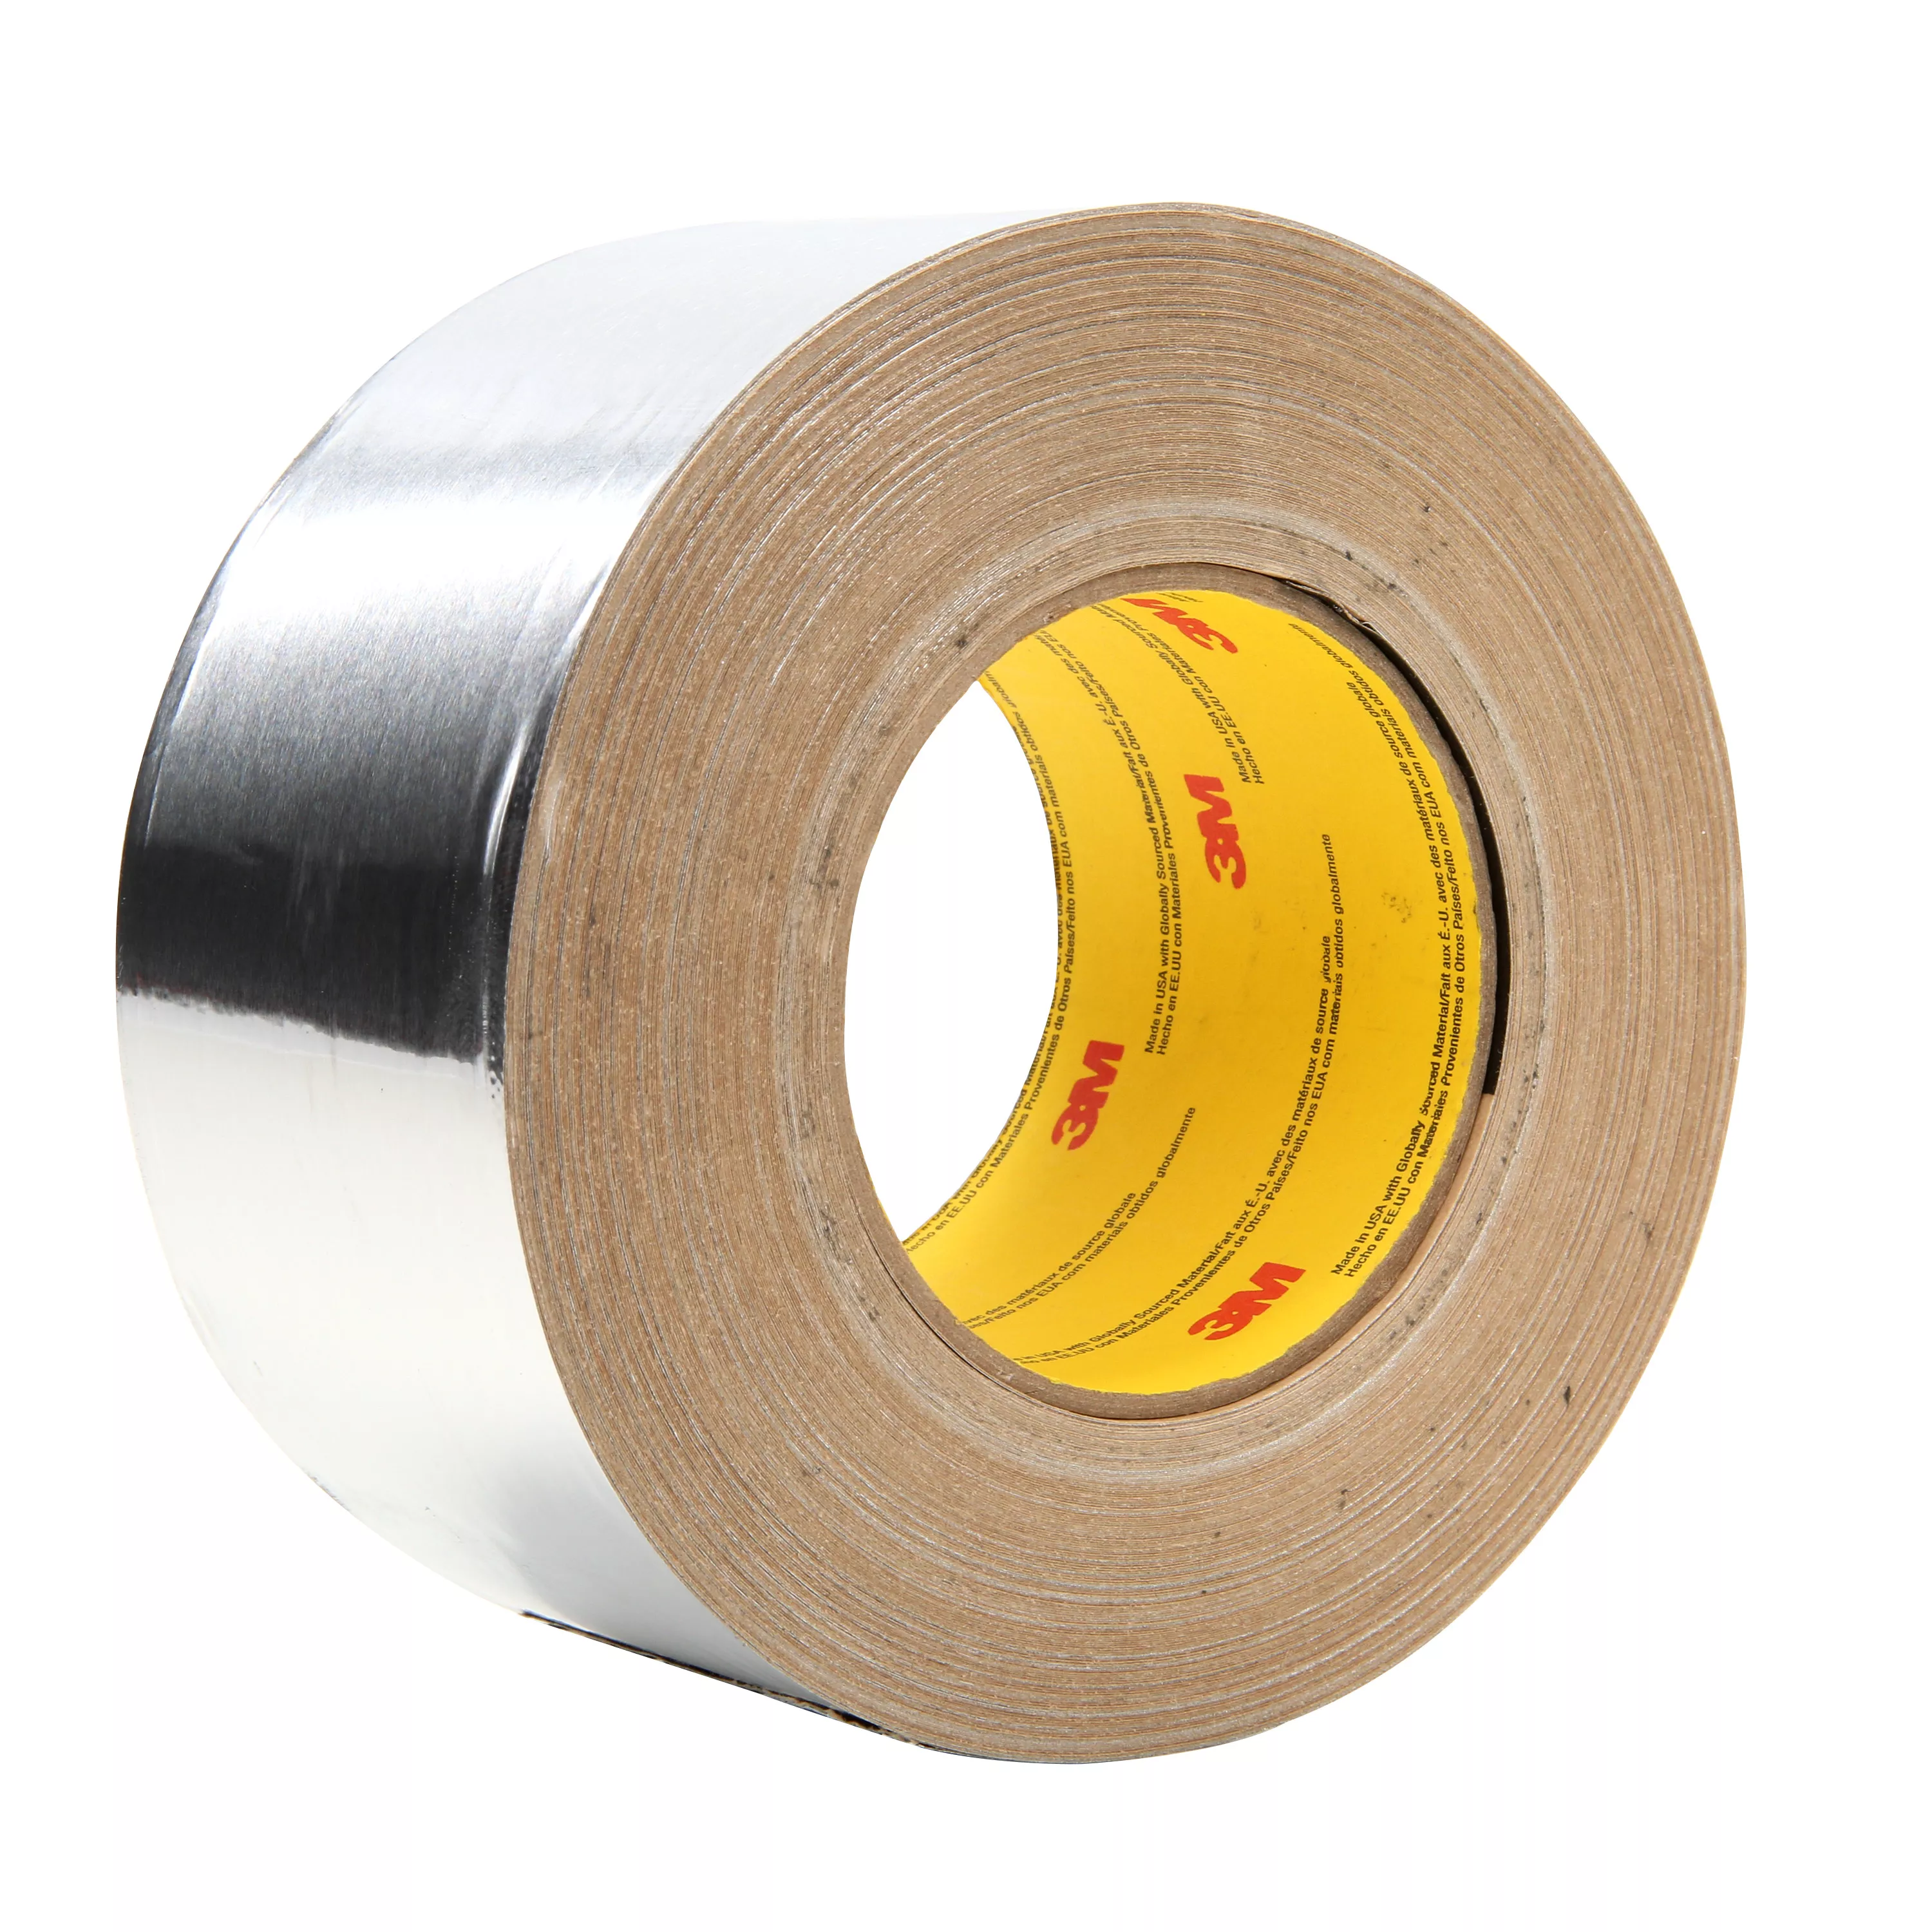 3M™ Venture Tape™ Aluminum Foil Tape 3520CW, Silver, 63.5 mm x 45.72 m,
20 rolls Rolls/Case